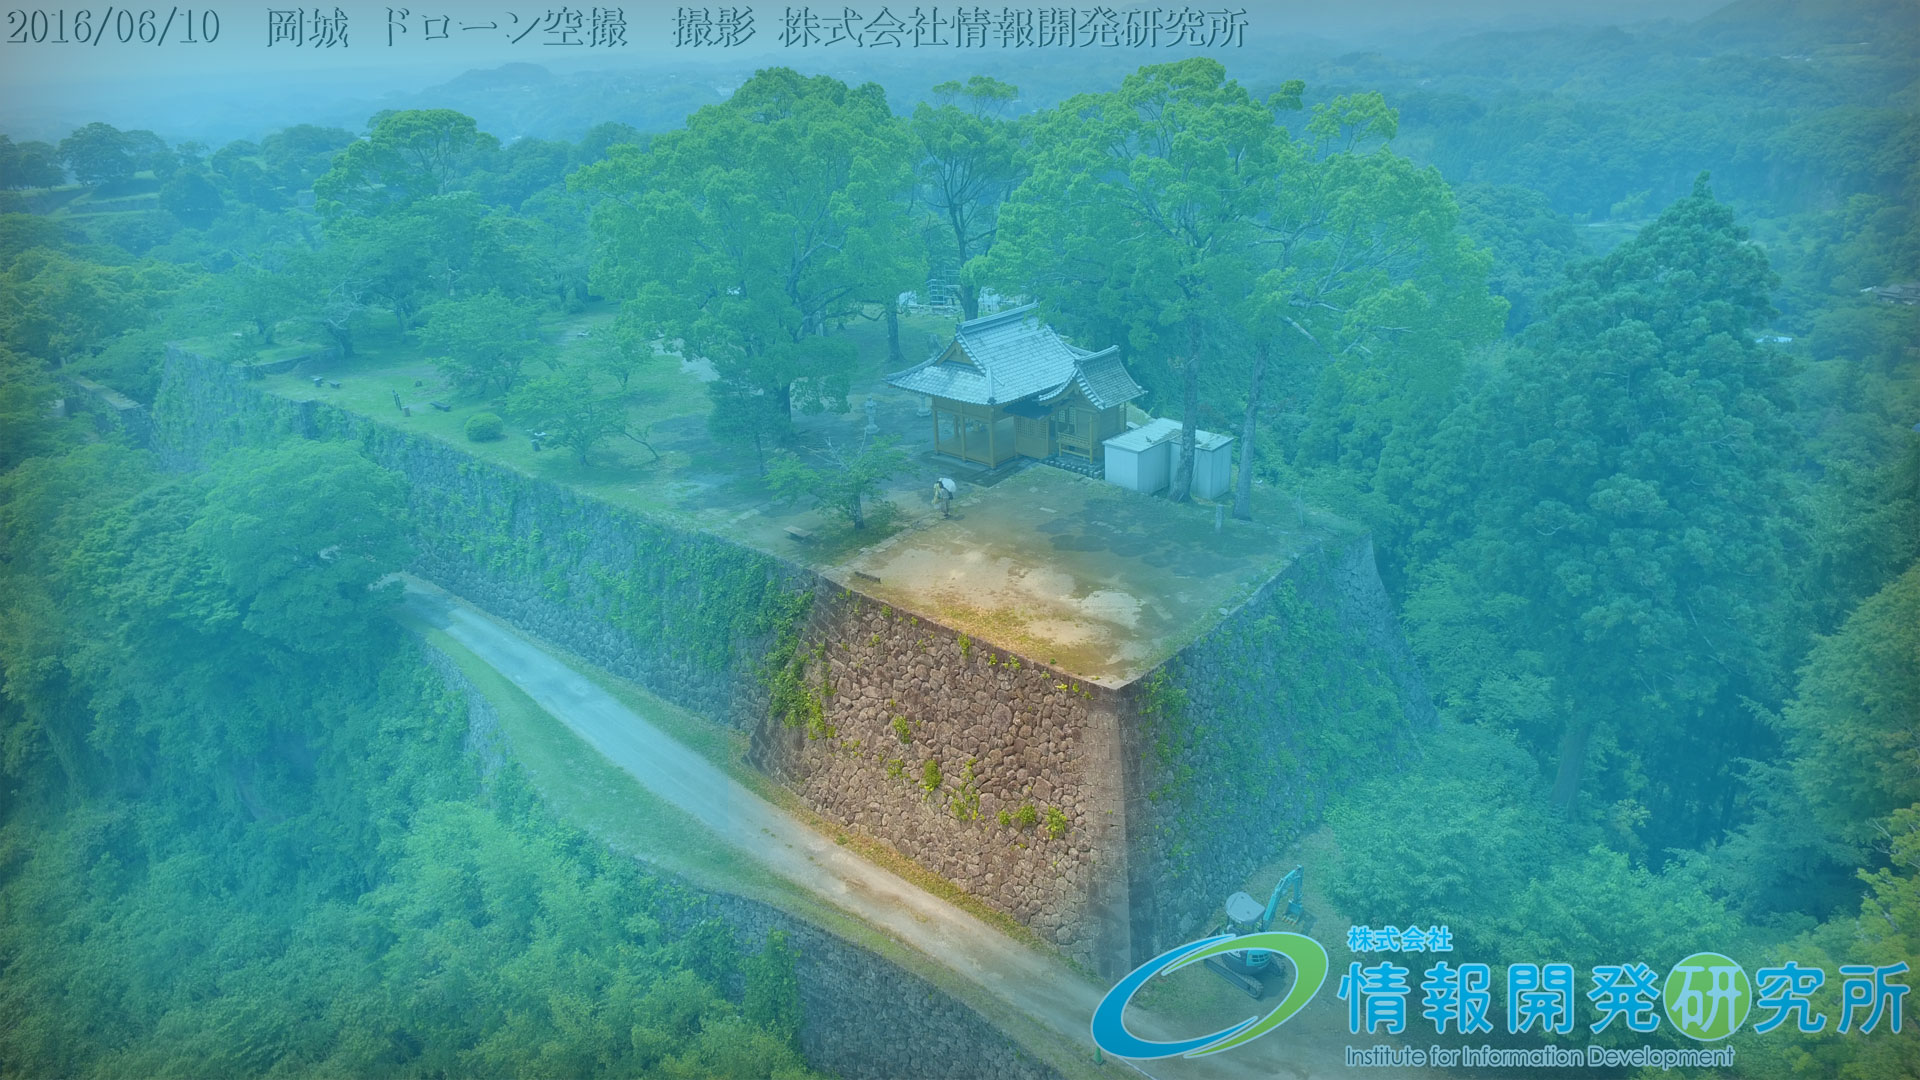 「車軸築」 岡城本丸の石垣kuruma